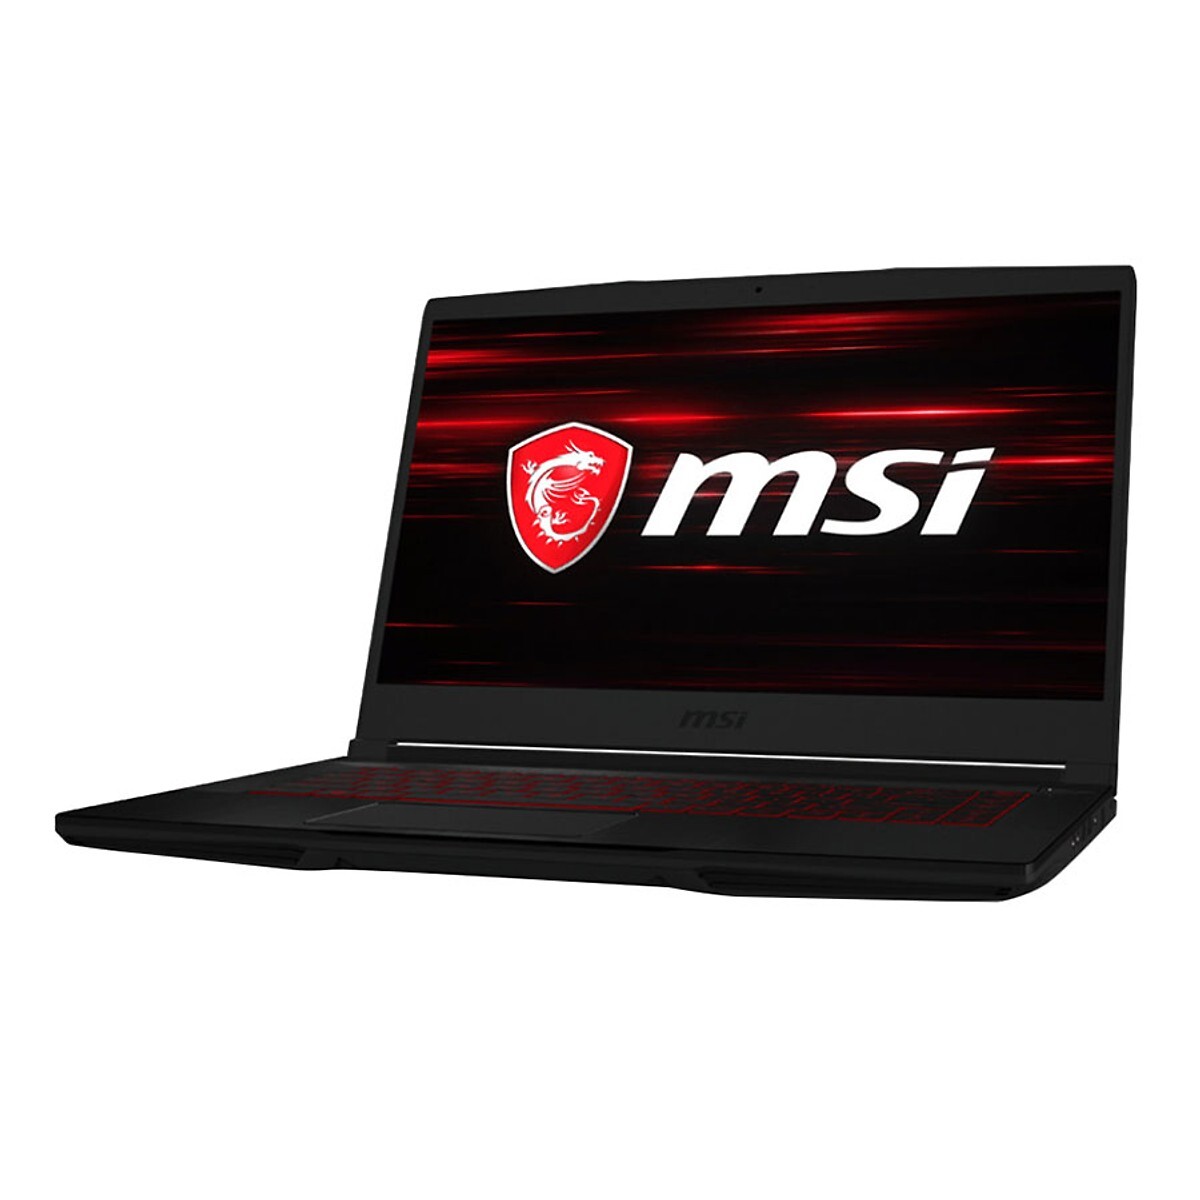 Laptop MSI GF63 Thin 9RC 273VN -  Intel Core i5-9300H, 8GB RAM, SSD 256GB, Intel UHD Graphics 630, 15.6 inch